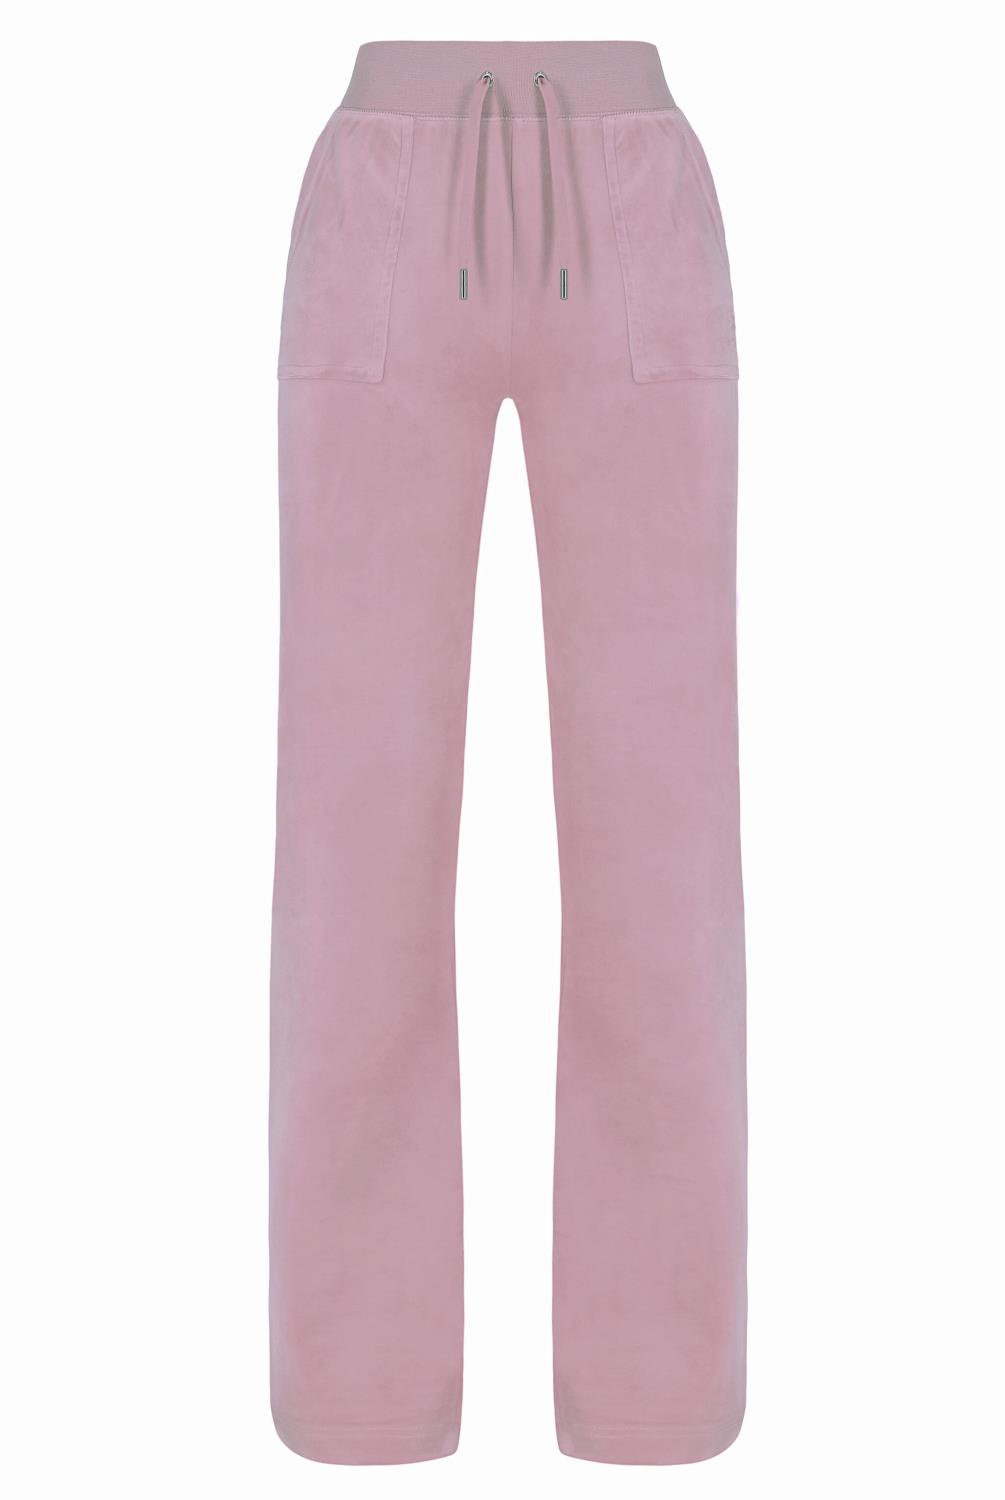 Del Ray Classic velour pant pocket design Keepsake Lilac FORHÅNDSSALG - Juicy Couture